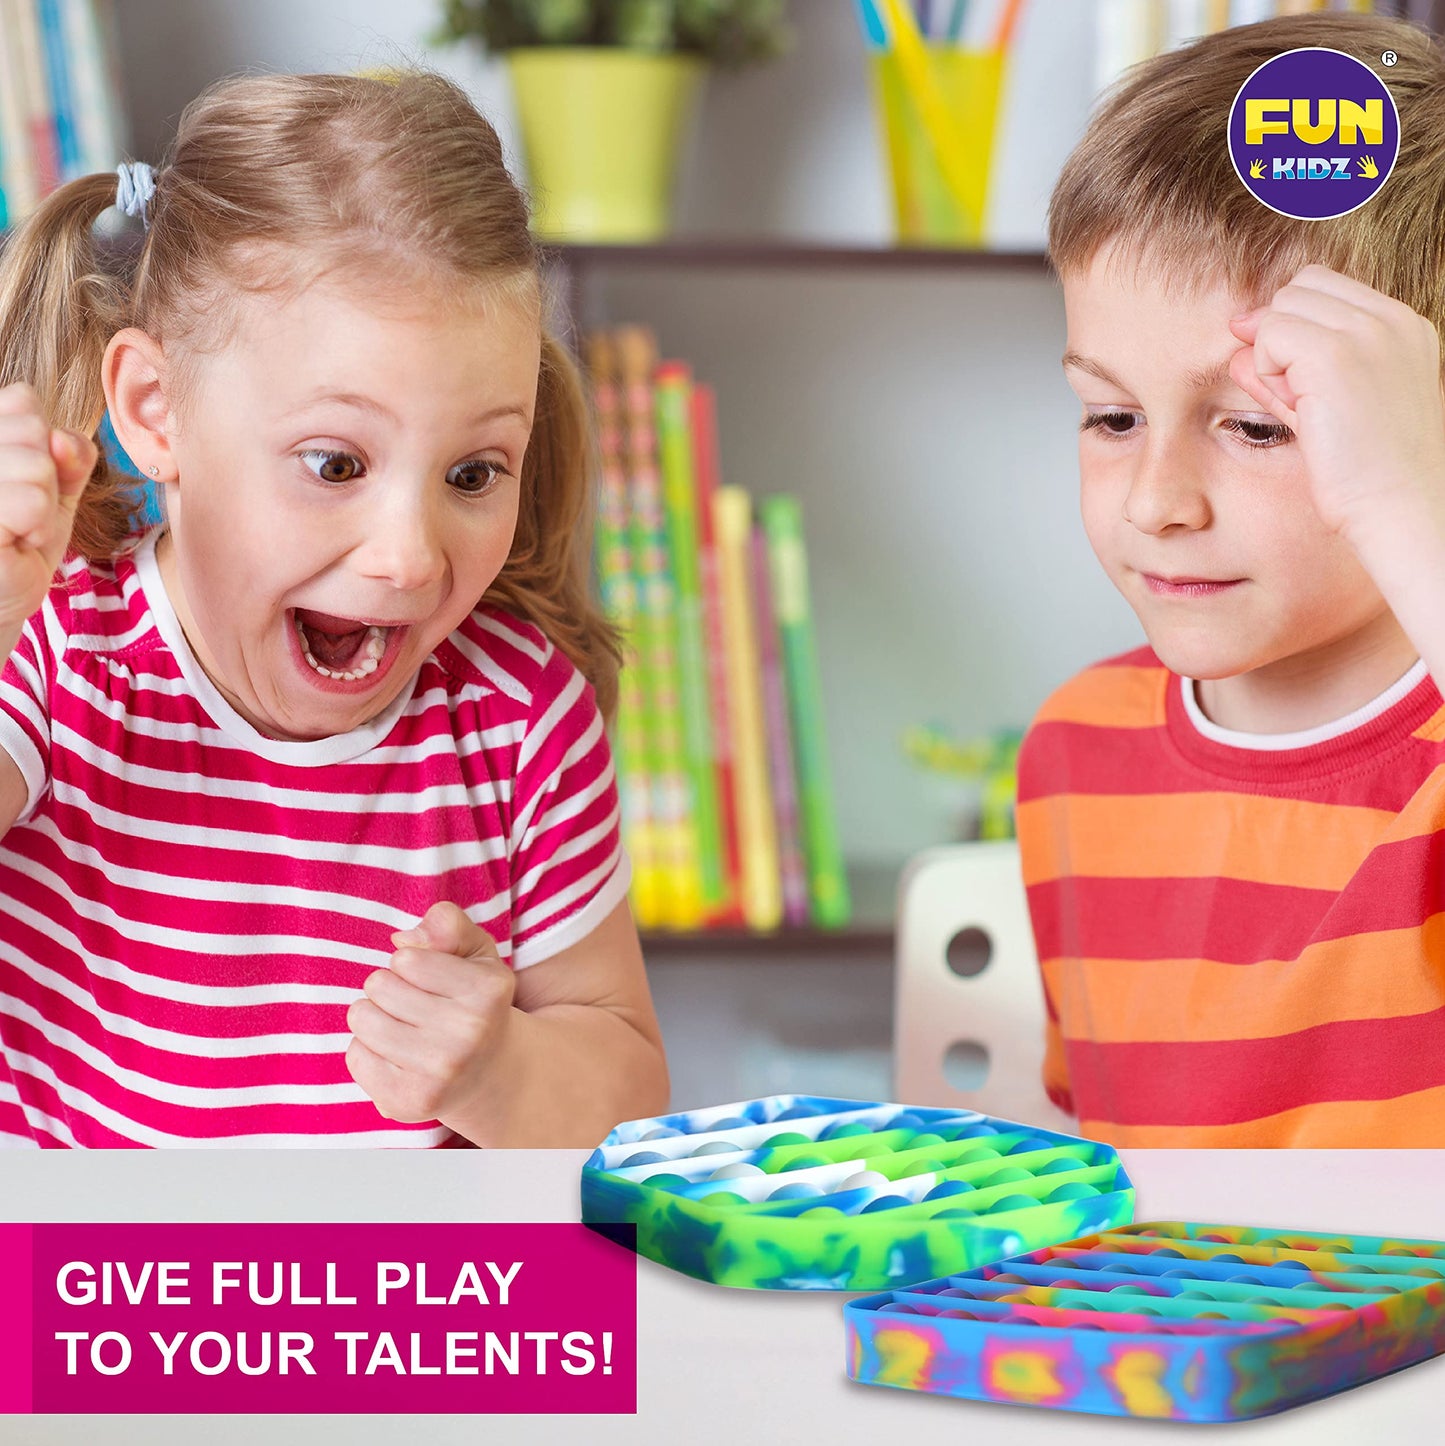 FUNKIDZ Tie Dye Push Pop Bubbles Fidget Toy, Stress Relief Anti-Anxiety Silicone Squeeze Sensory Toy for Kids Boys Girls